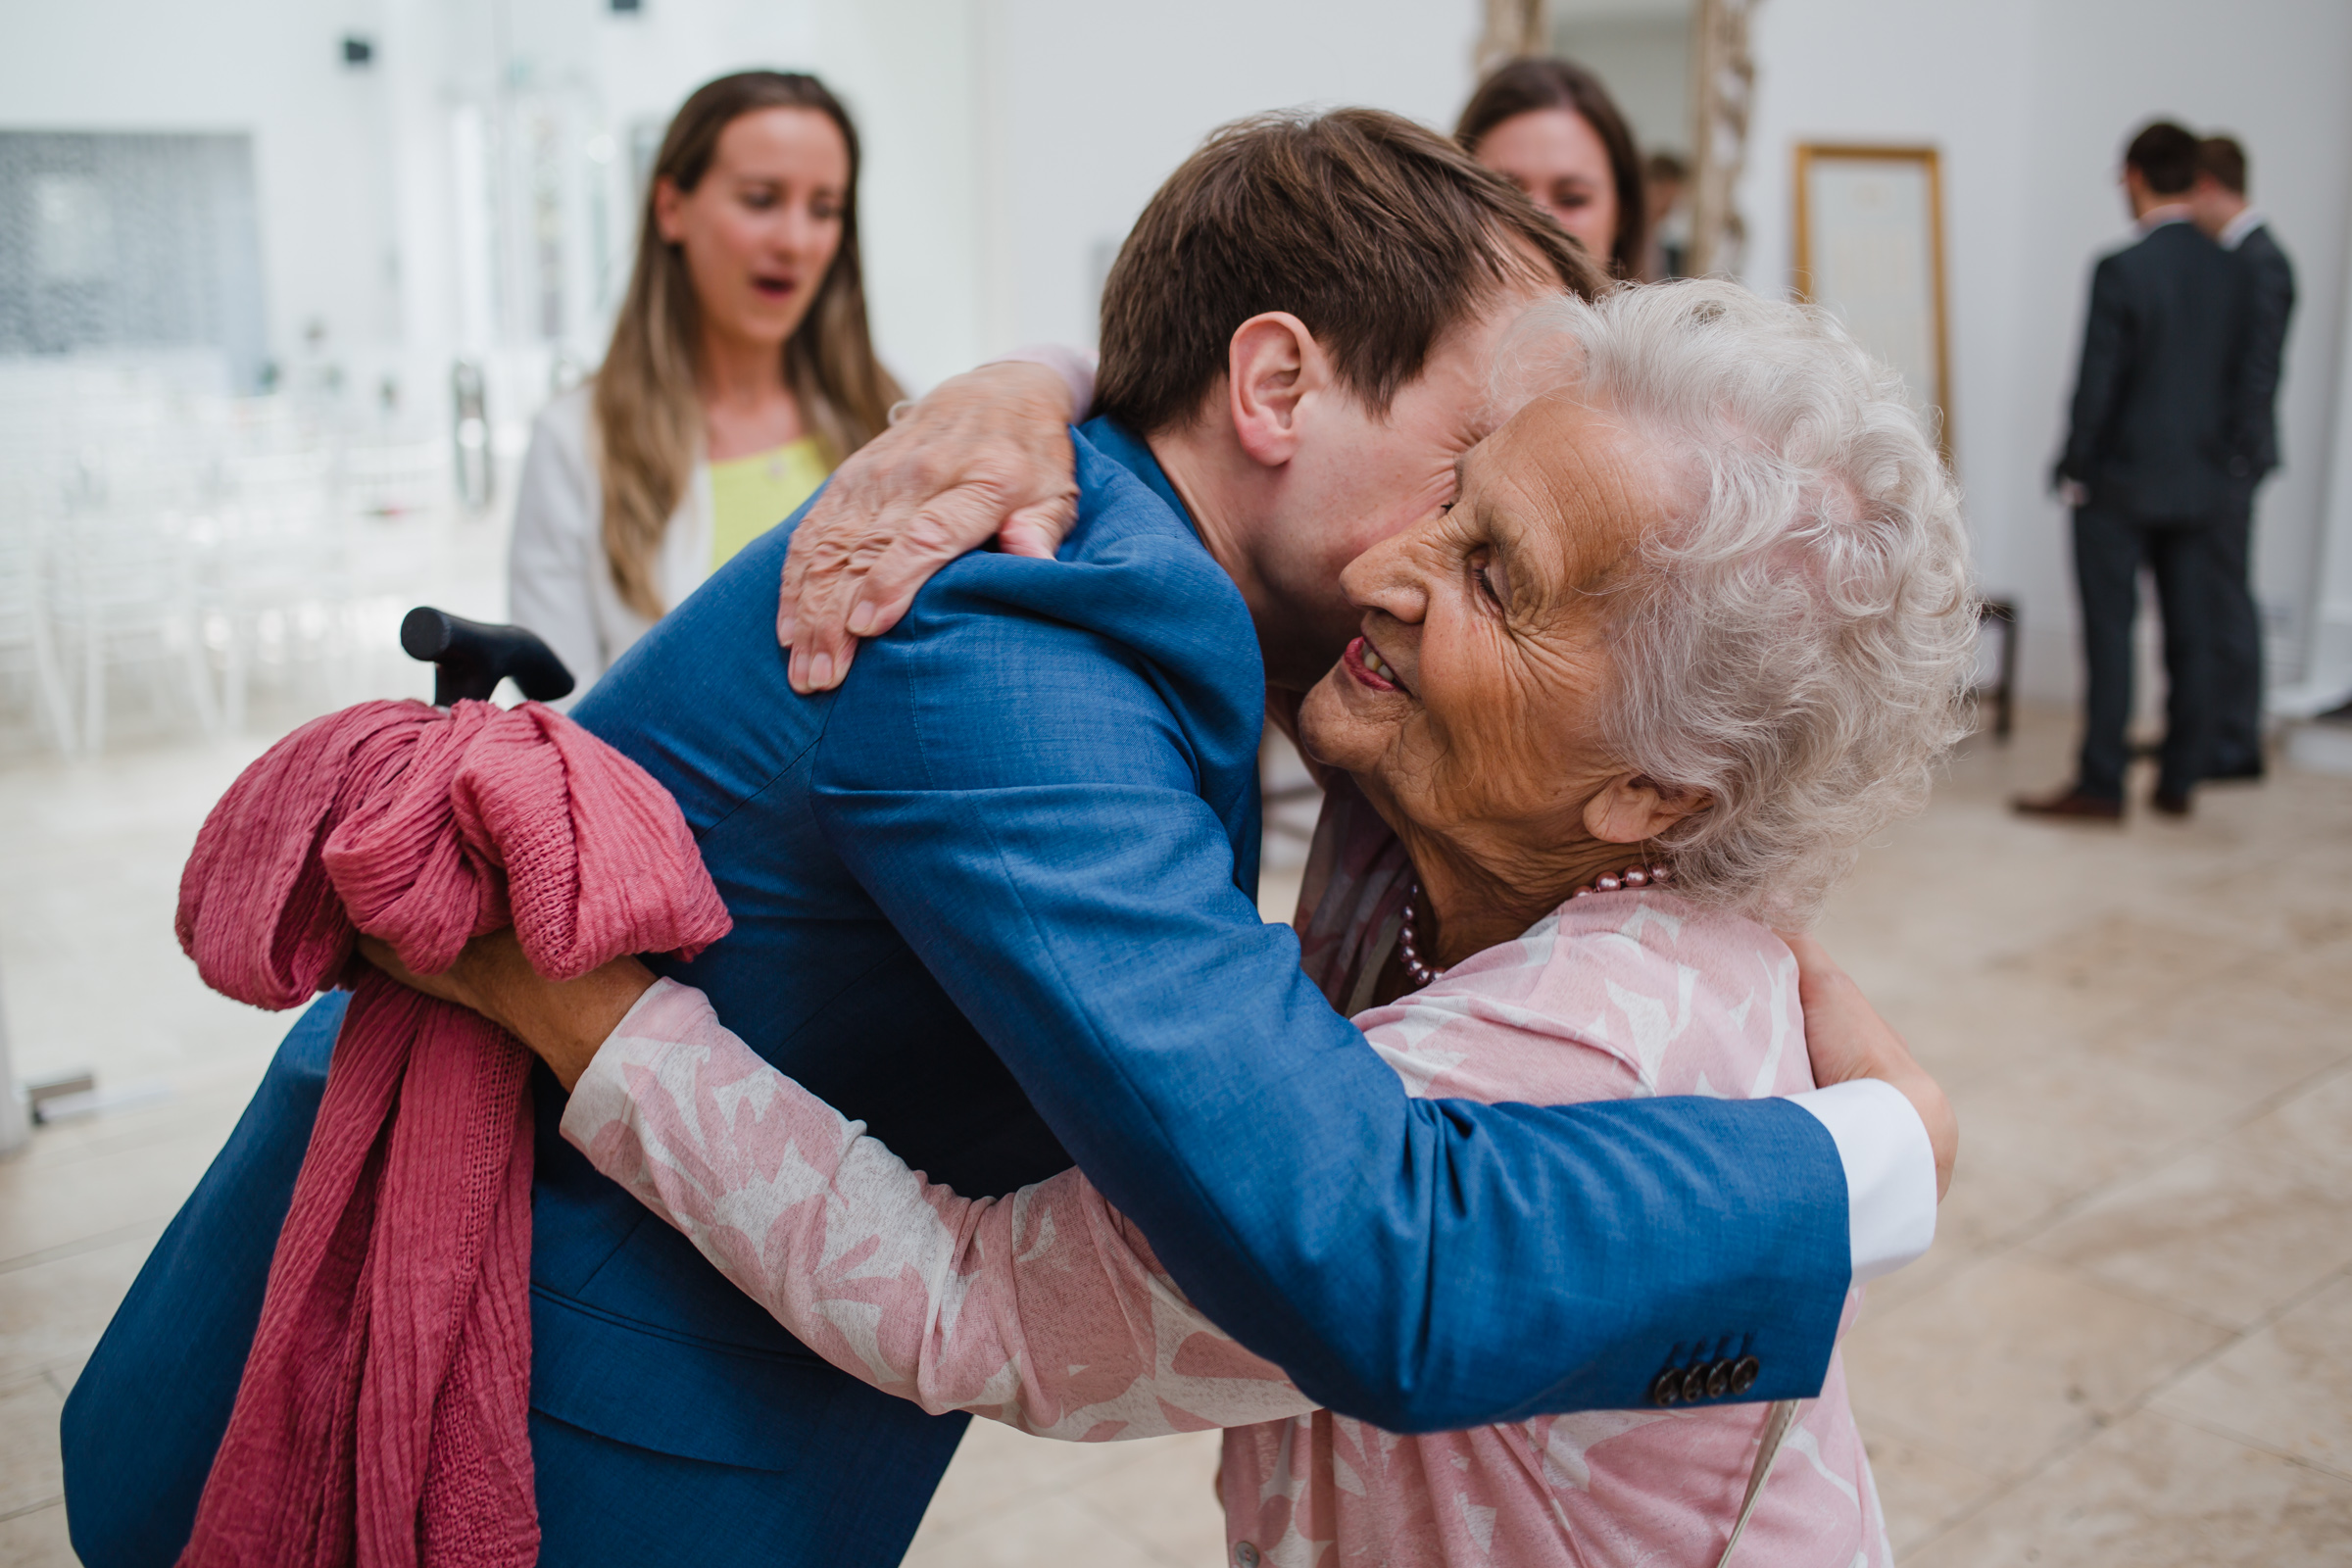 grandma gets a hug from the groom at a wedding at fazeley studios.